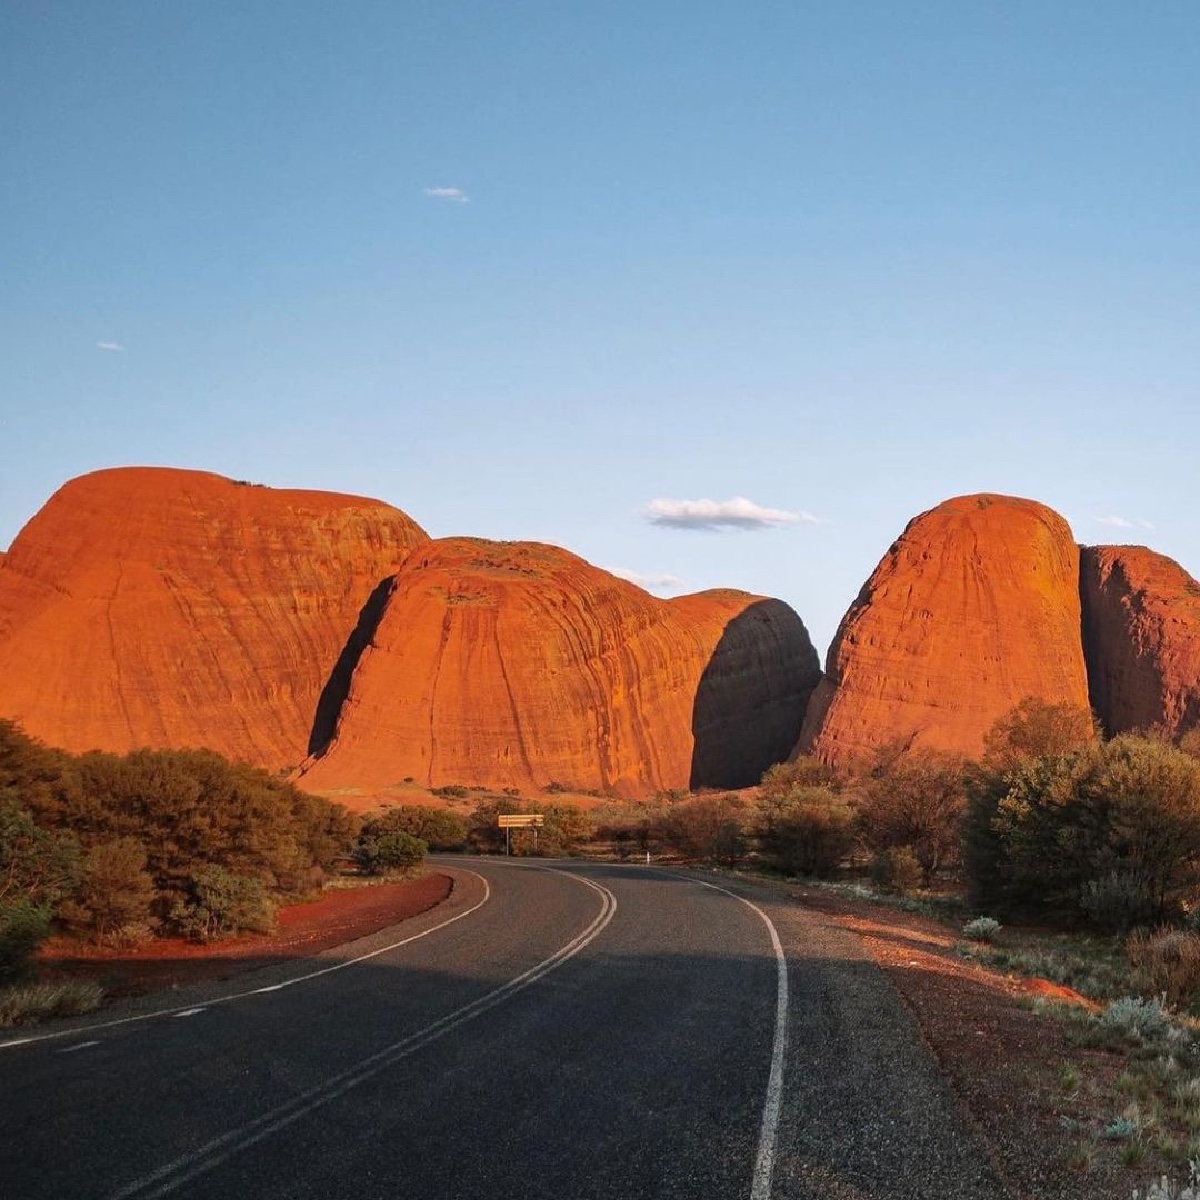 All #roadtrips *should* lead to #KataTjuṯa 🚗❤️

Today, we're joining IG/twosometravellers and exploring this stunning region in @NT_Australia's #UluruKataTjutaNationalPark - home to the Anangu people.

#seeaustralia #comeandsaygday